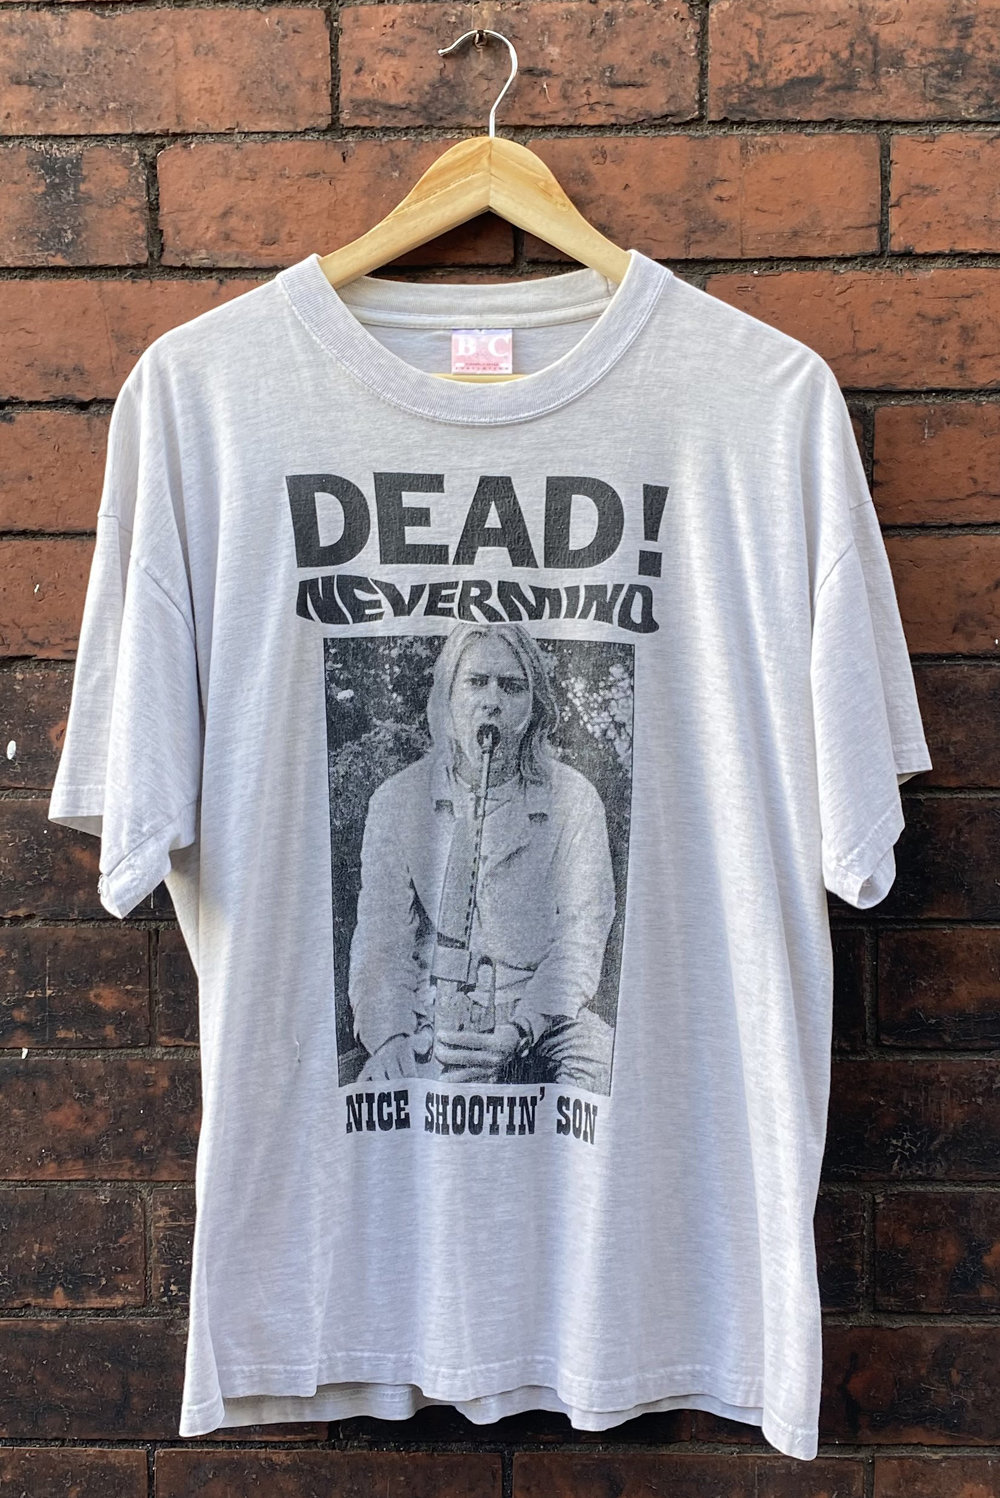 Vintage Kurt Cobain Suicide Shotgun T-Shirt nice shootin' son